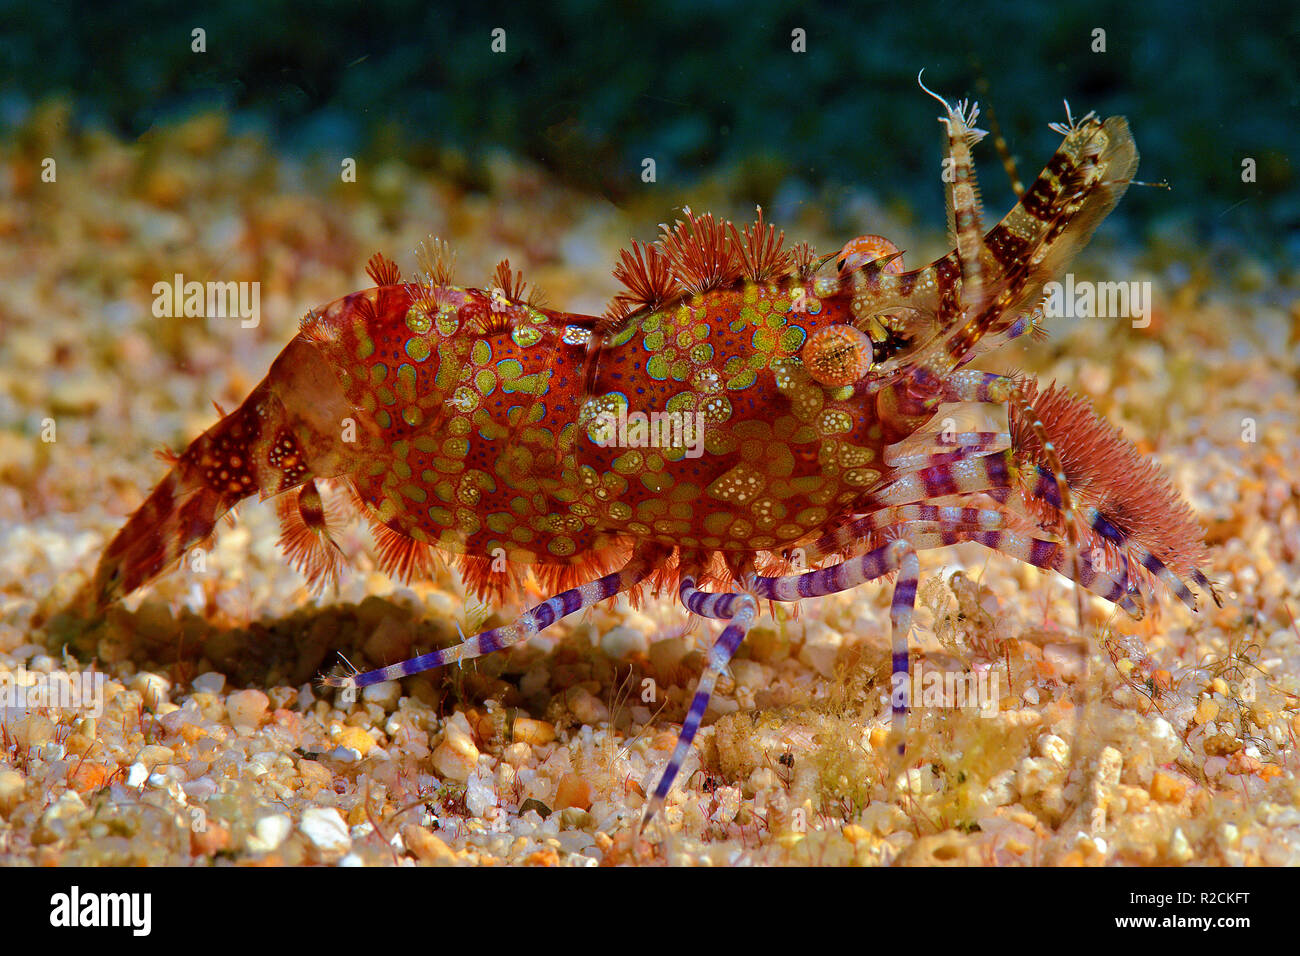 Marble shrimp (Saron marmoratus), Witu island, West New Britain, Papua New Guinea, Pacific Ocean Stock Photo